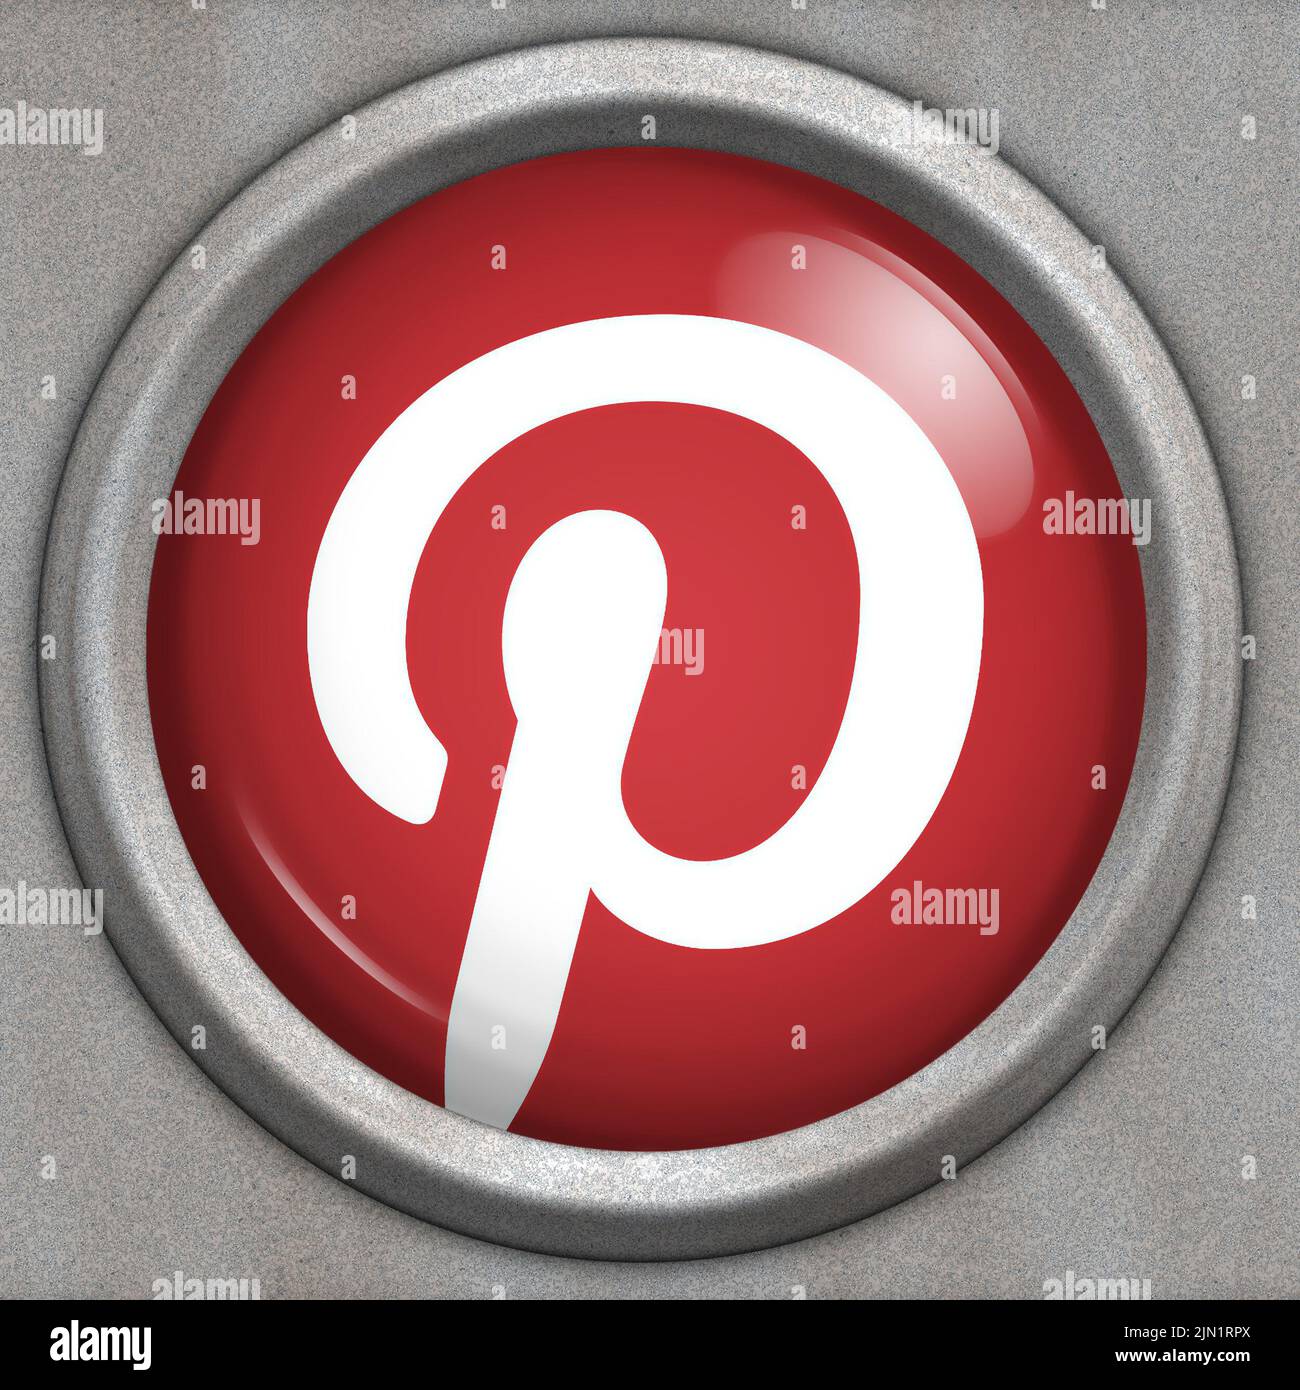 button with logo of social media service Pinterest Stock Photo